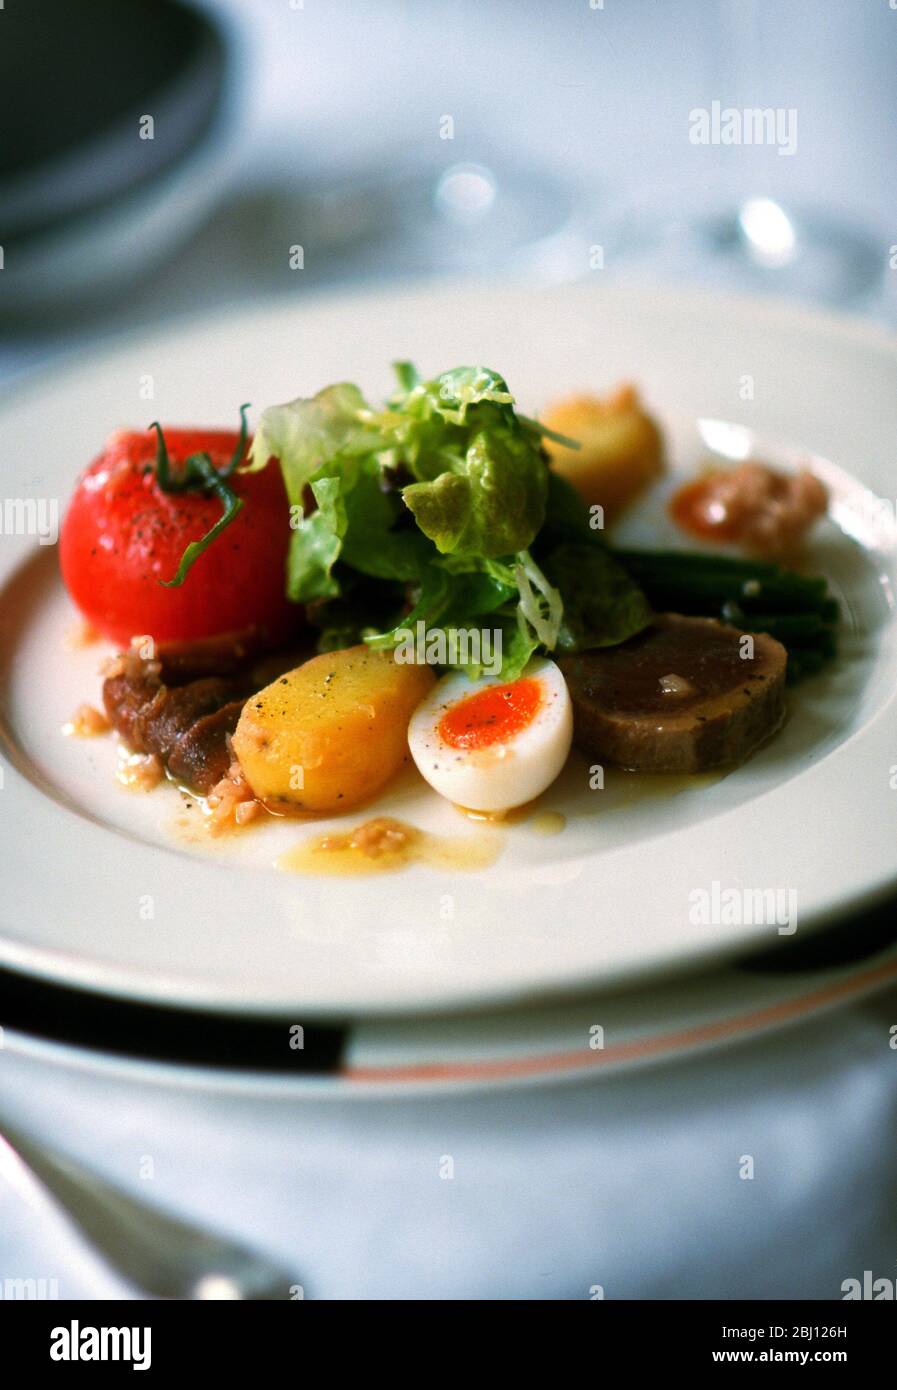 Superior Salat Nicoise mit Elementen separat serviert. - Stockfoto